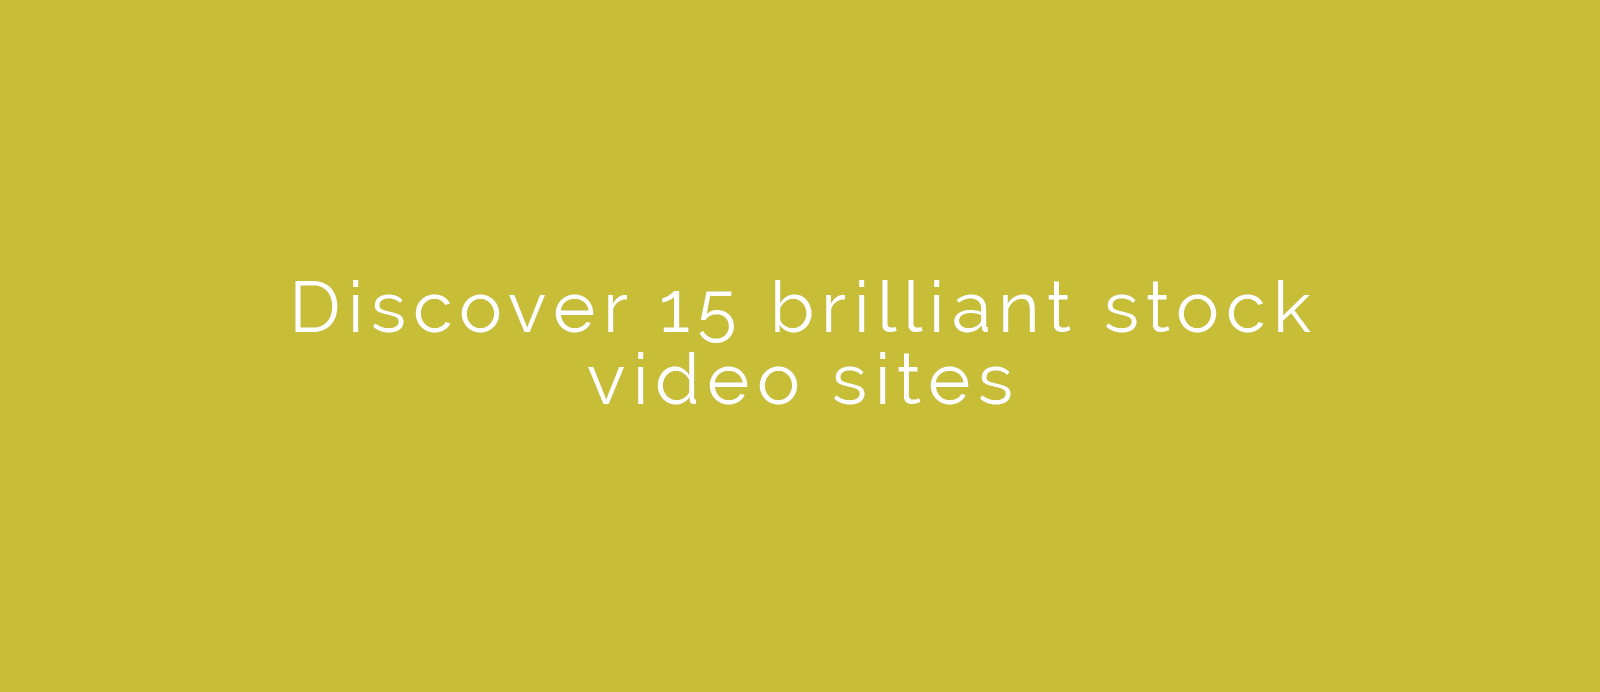 Discover 15 brilliant stock video sites